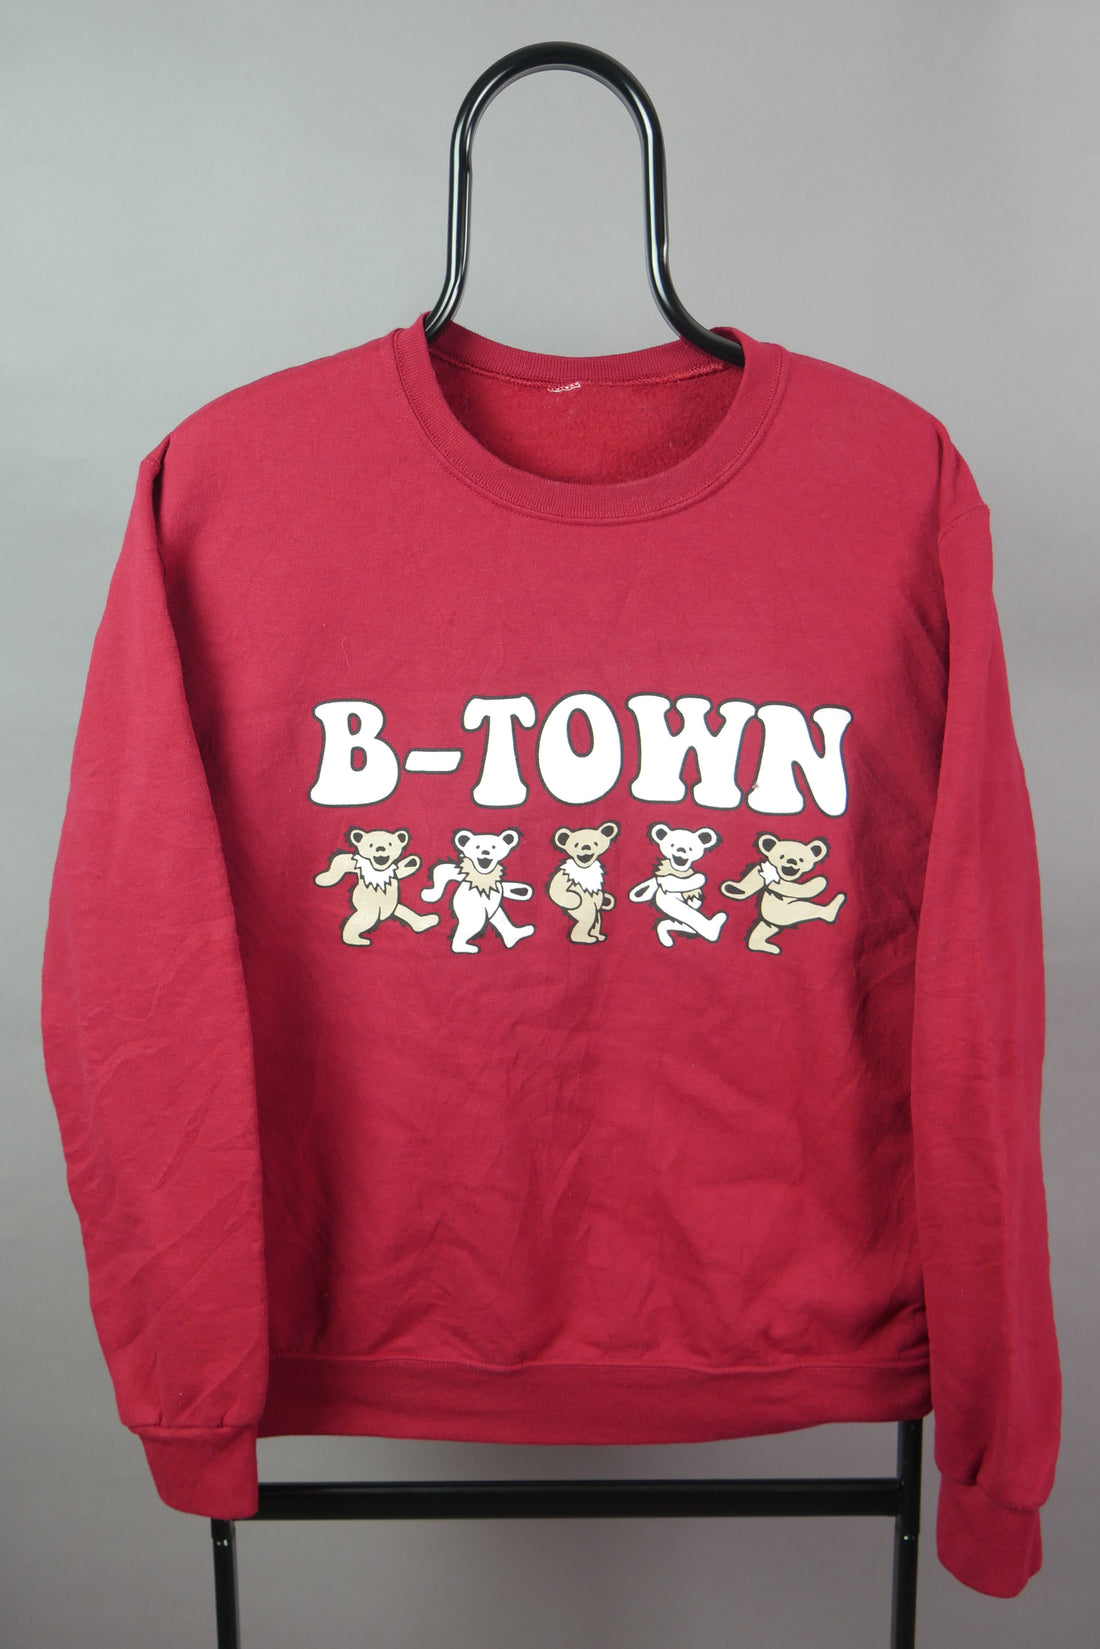 The B-town Graphic Sweatshirt (S)